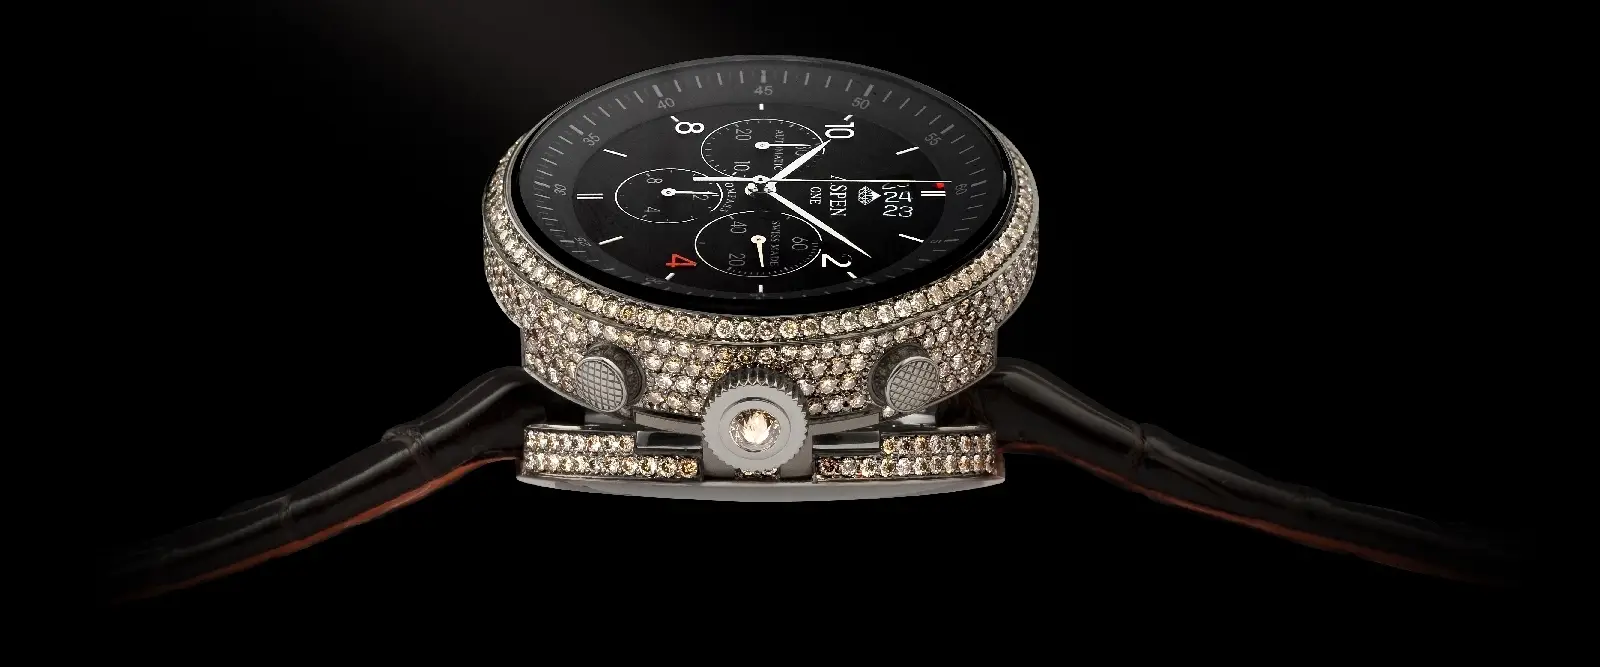 ASPEN Jewellery and Watch – kolekcja Aspen One i model Black Piste z kompasem